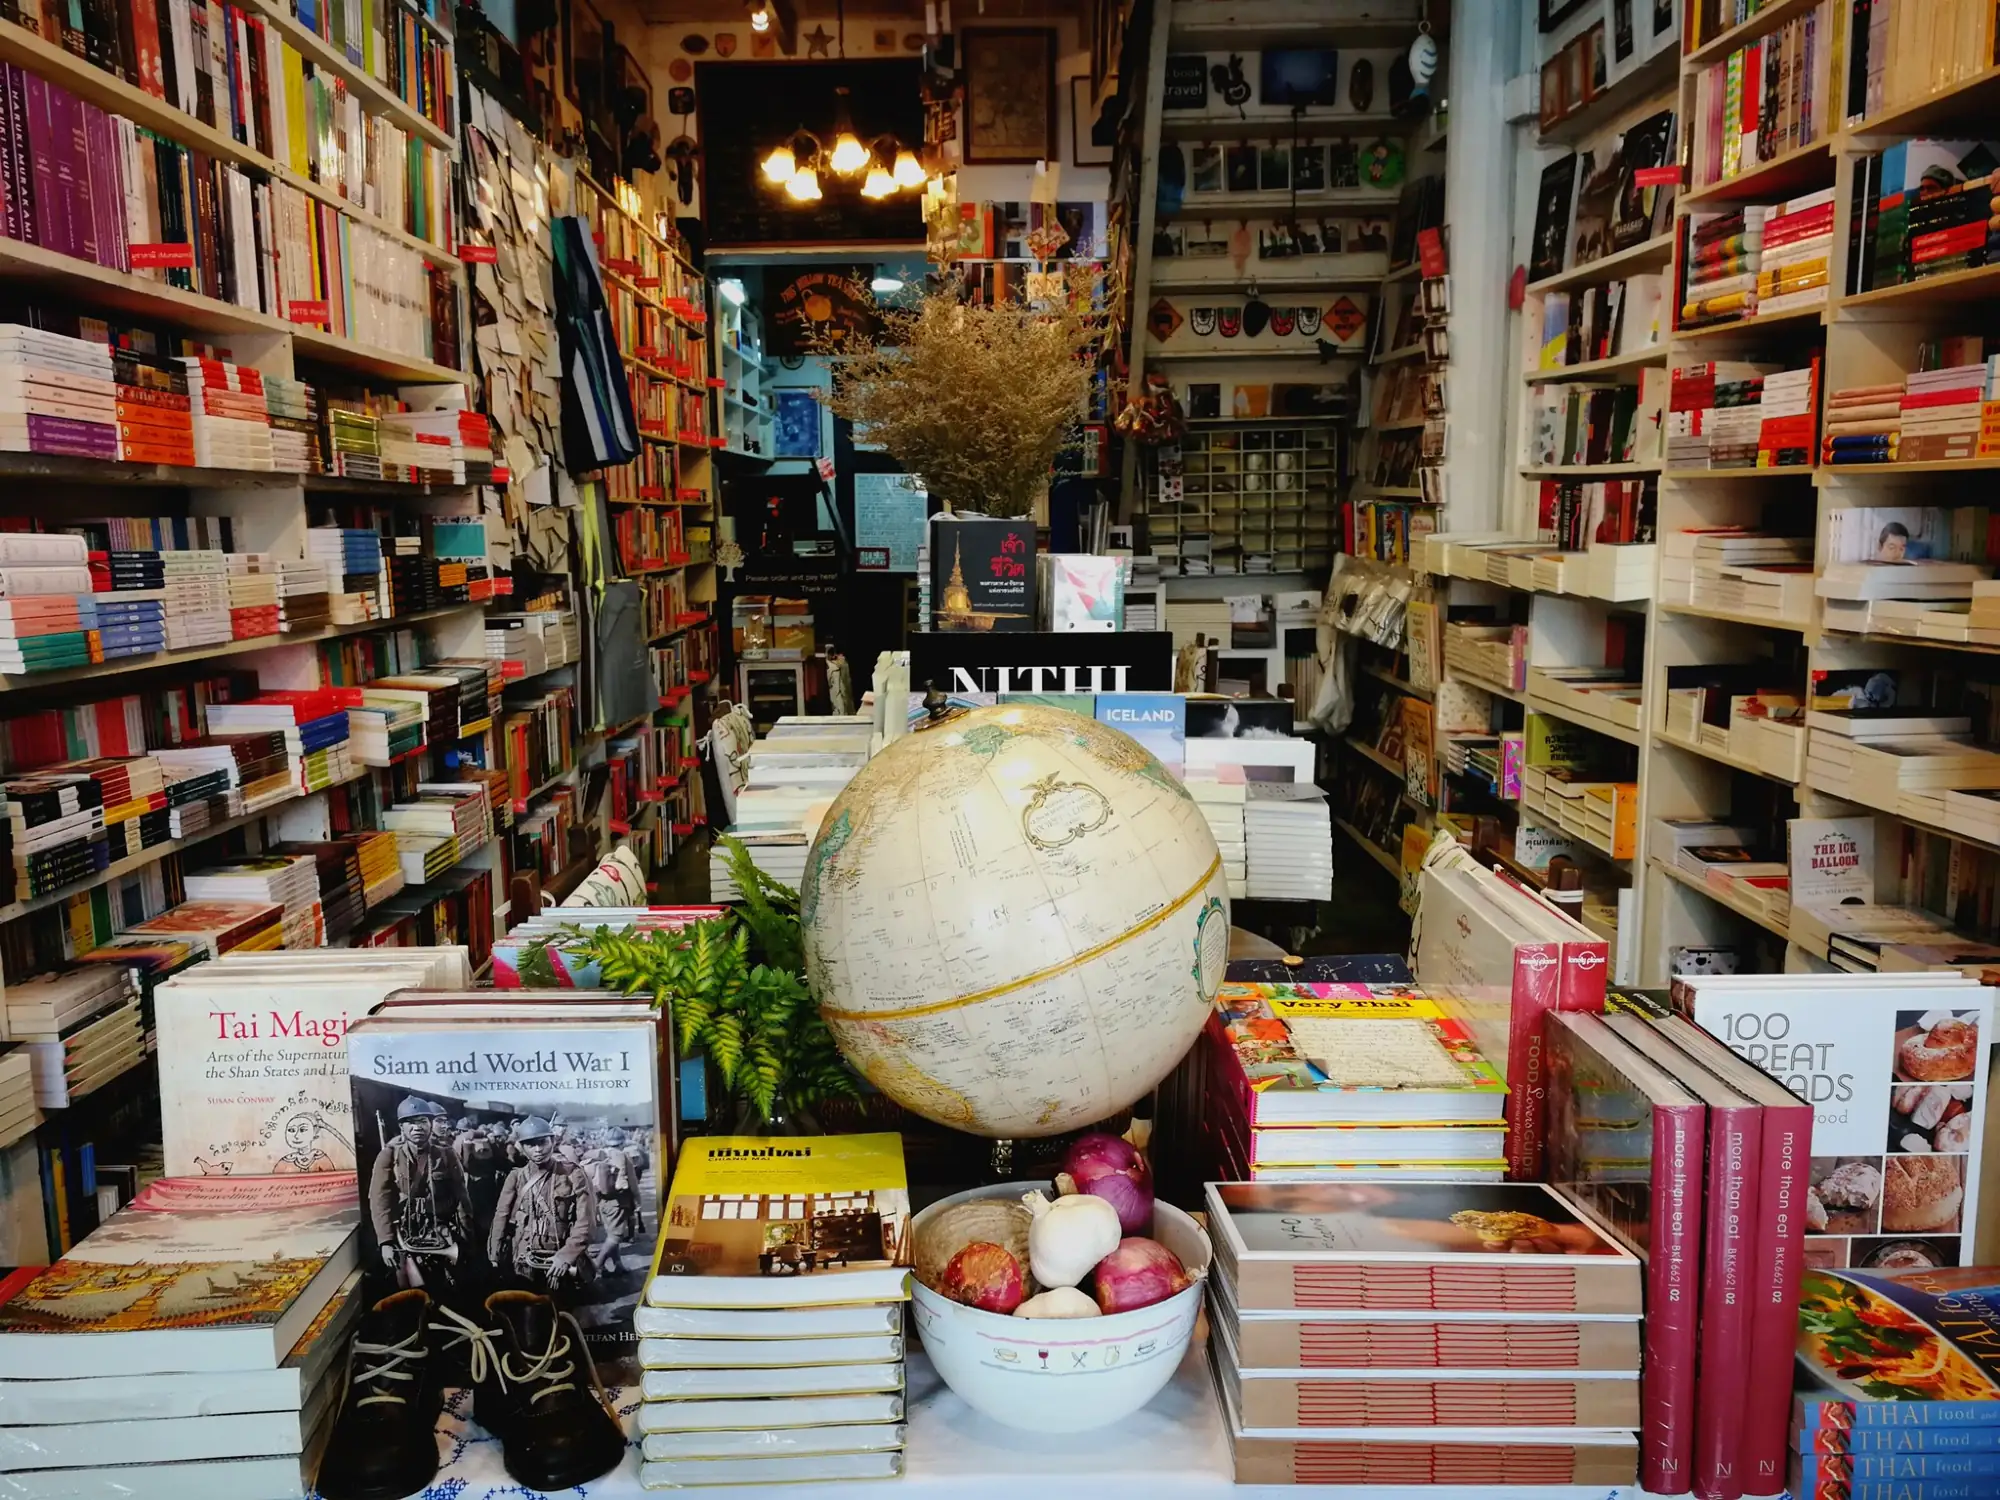 Passport Bookshop空间相对狭窄，共有两层，在书店的各个角落都放满了书籍，从旅游攻略、纪实小说和摄影写真等（图片来源：脸书@YoNoom Passportbookshop）